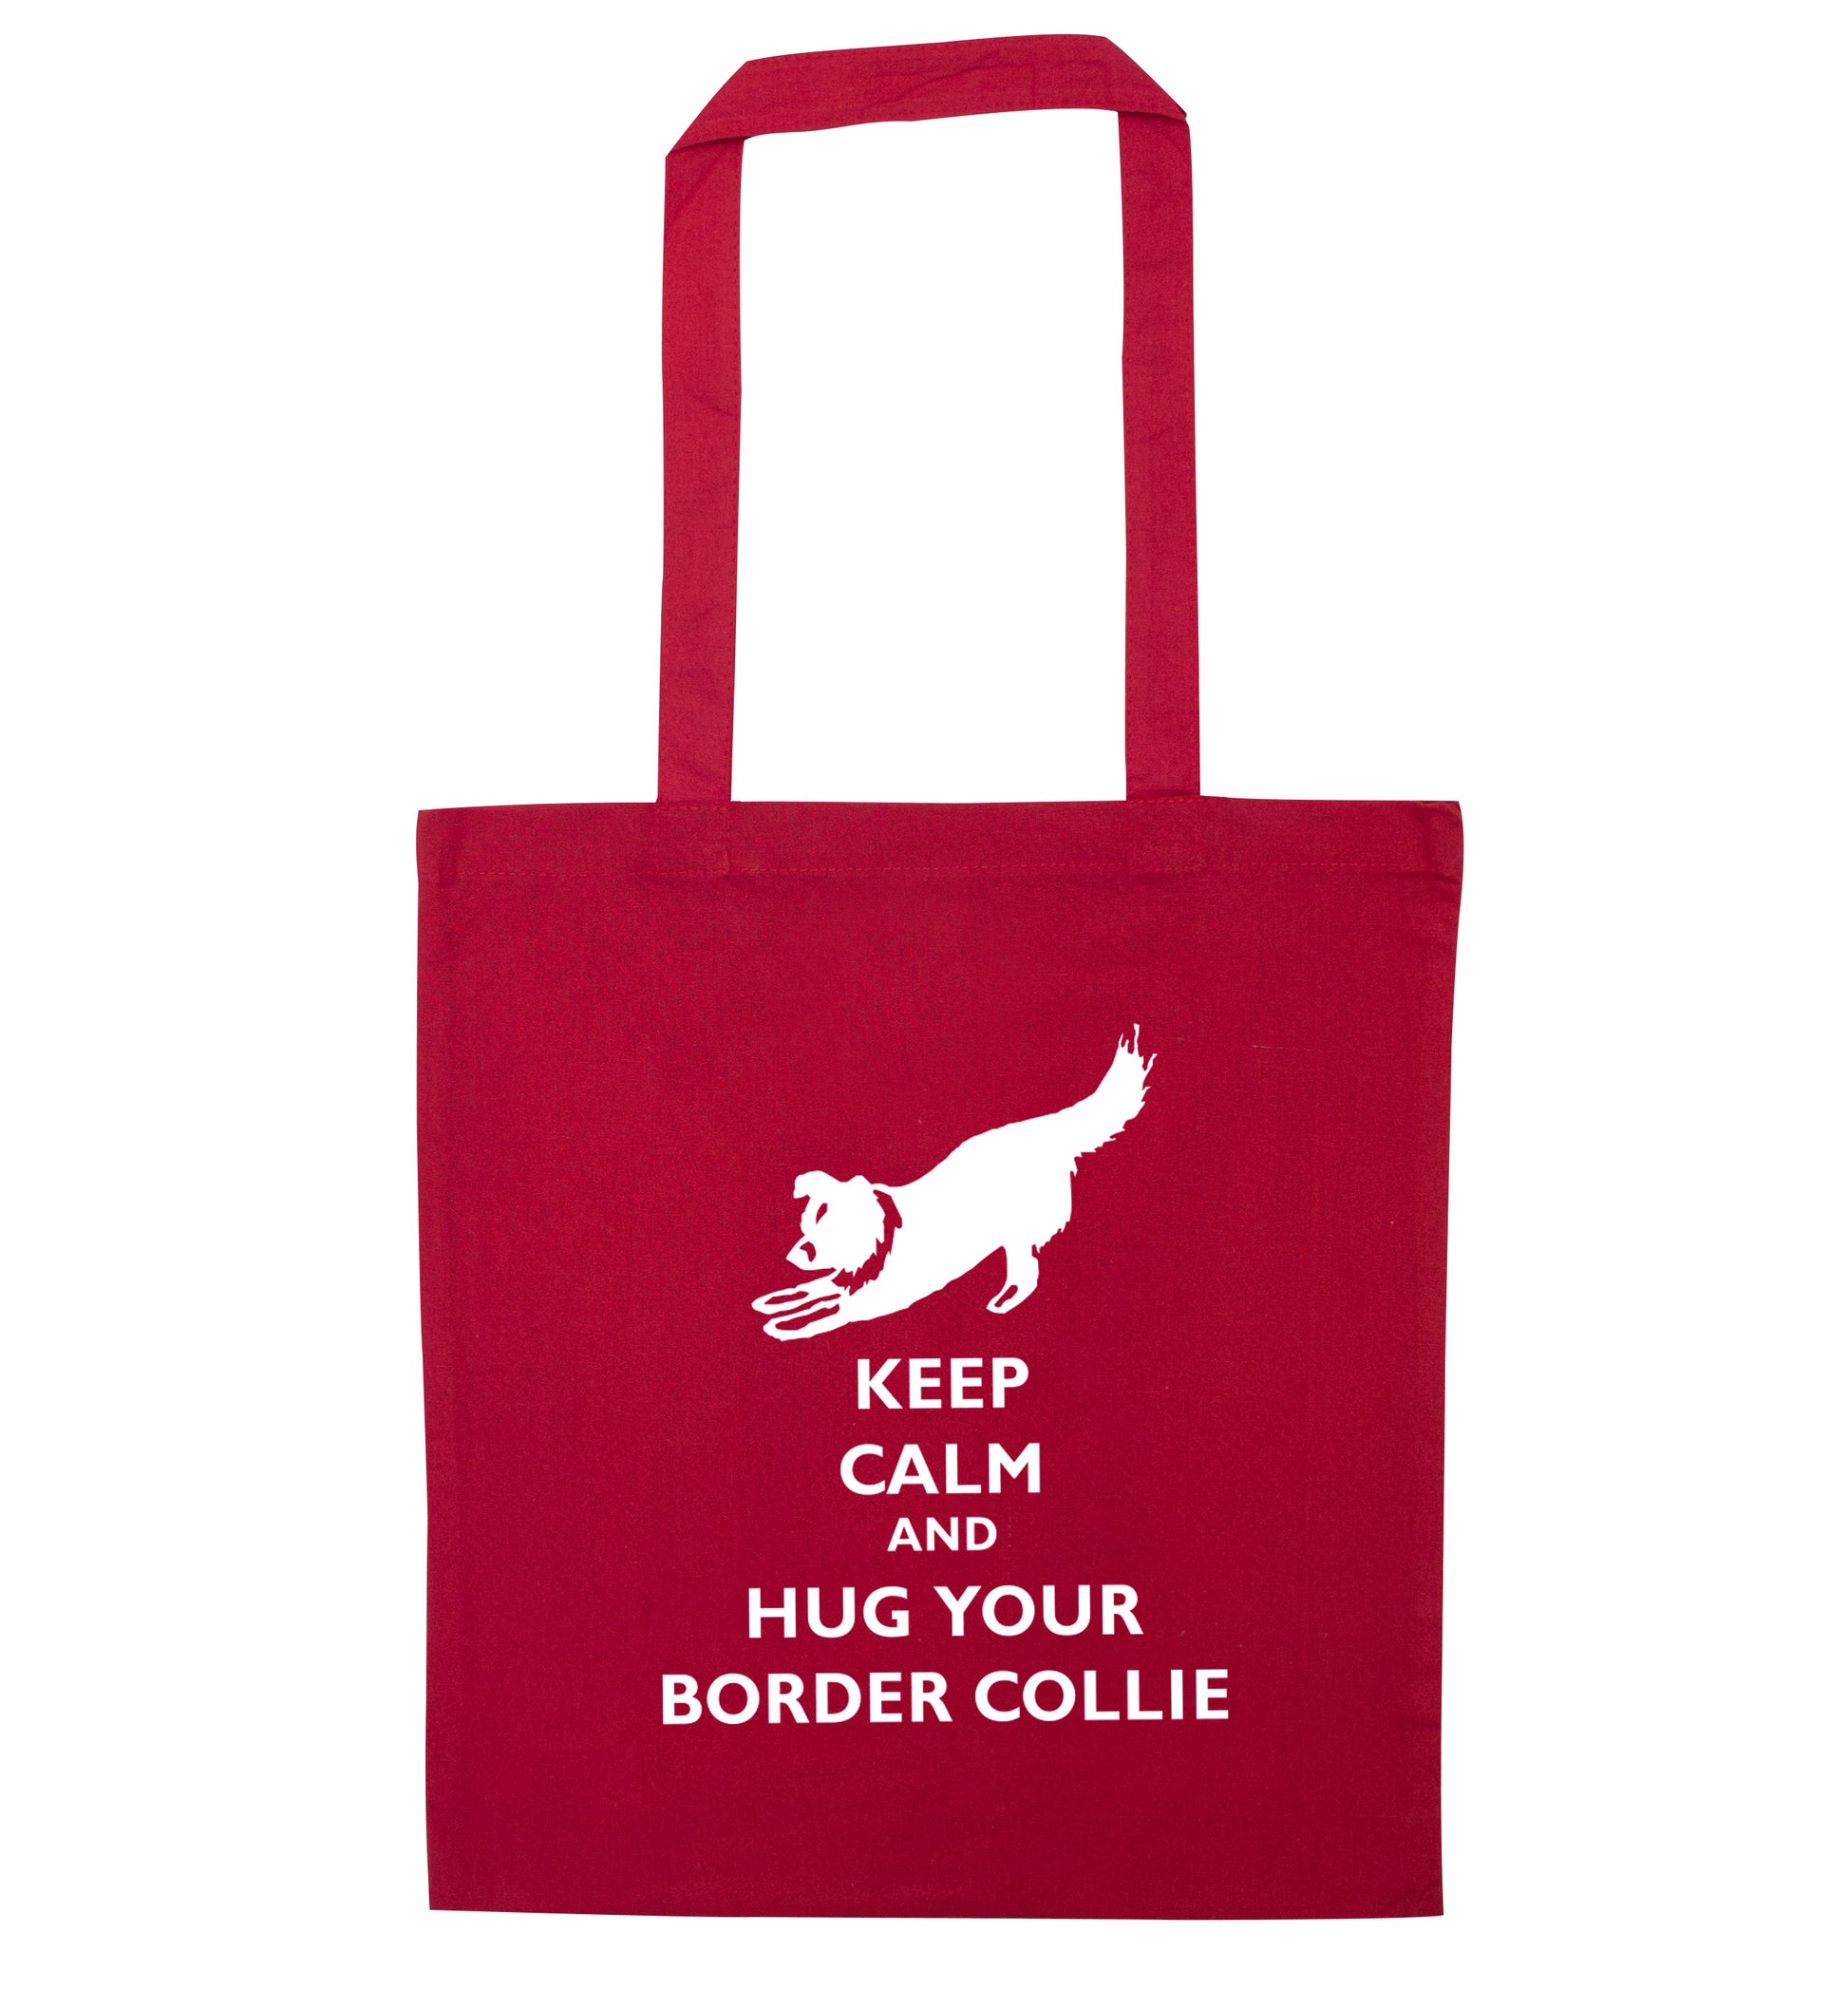 Keep calm and hug your border collie red tote bag